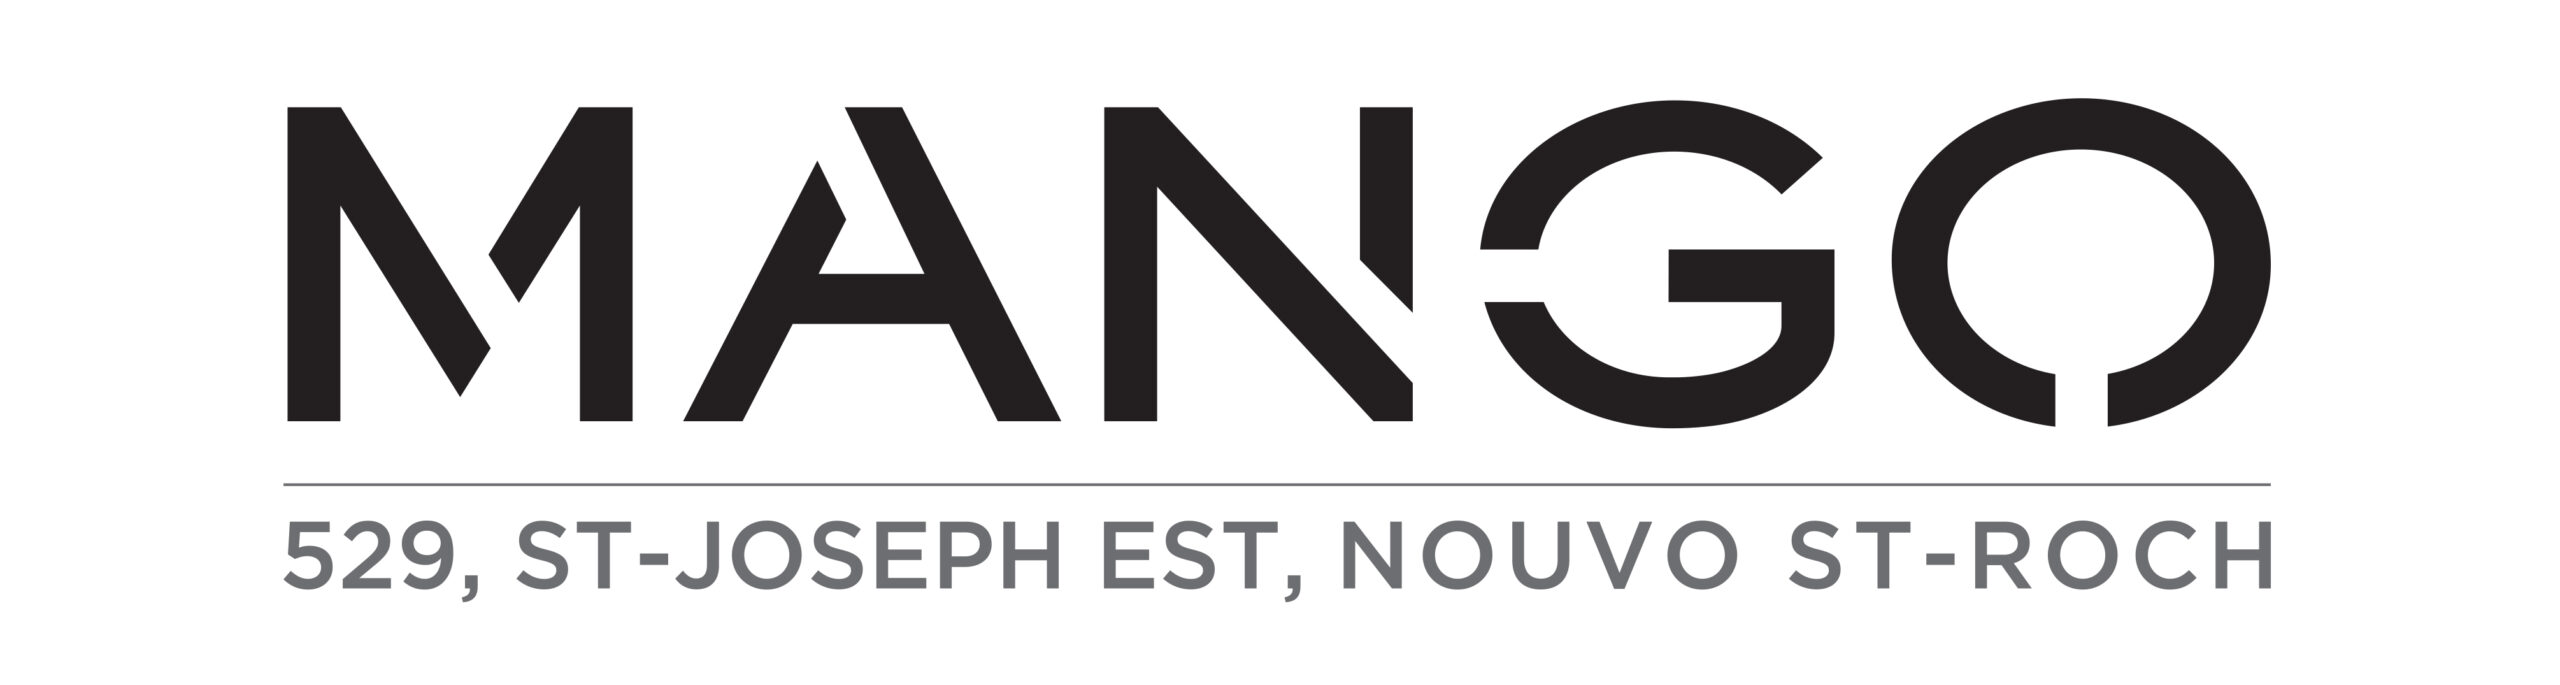 logo mango_st-joseph